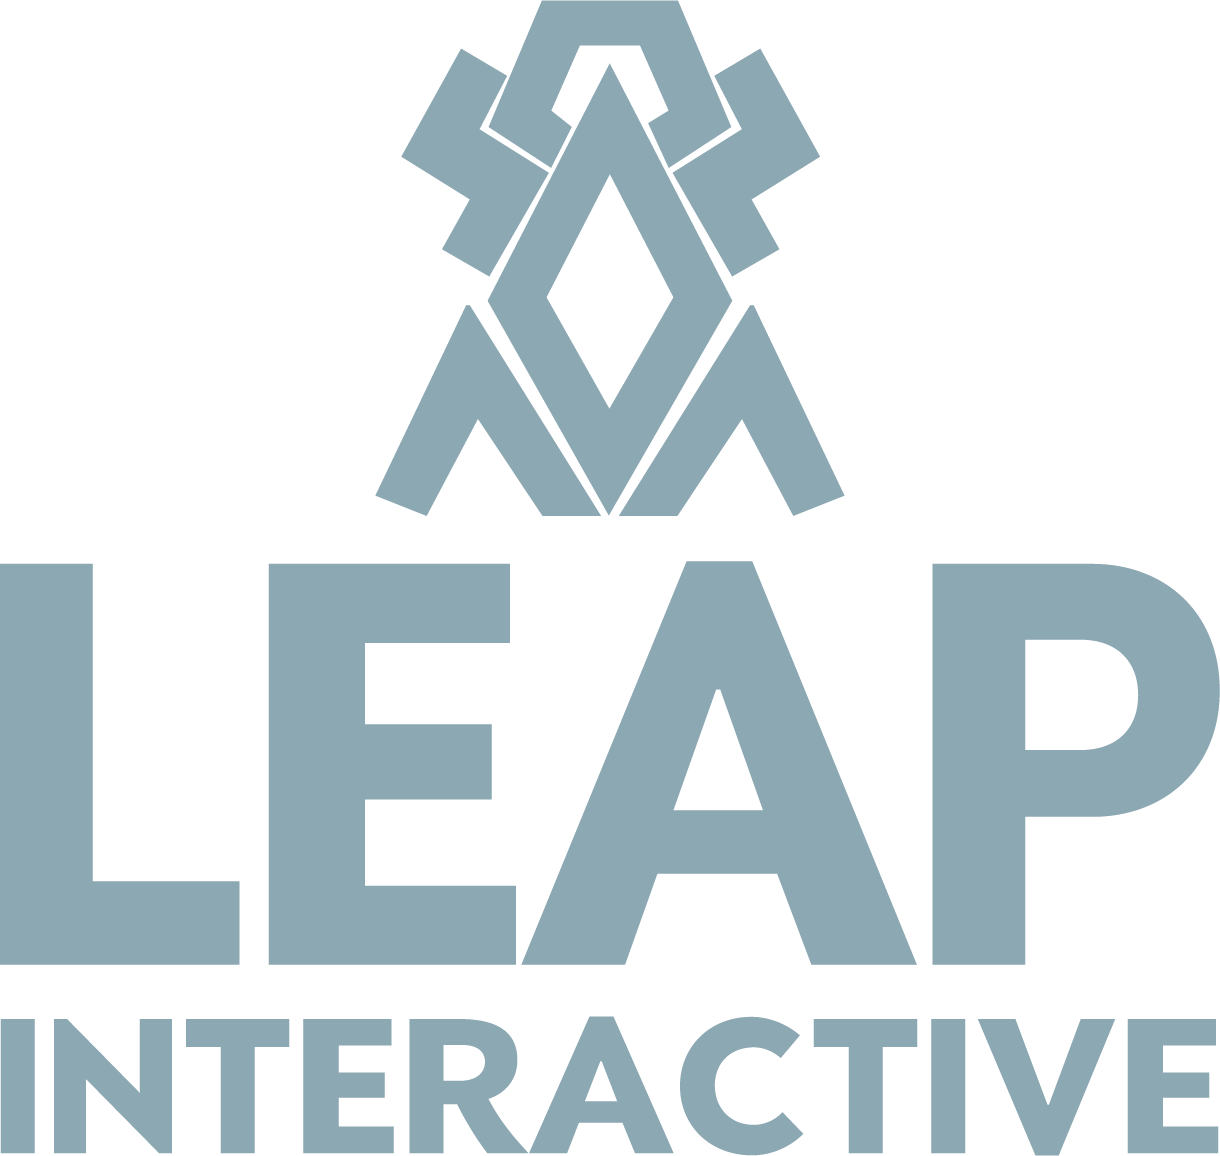 LEAP-interactive